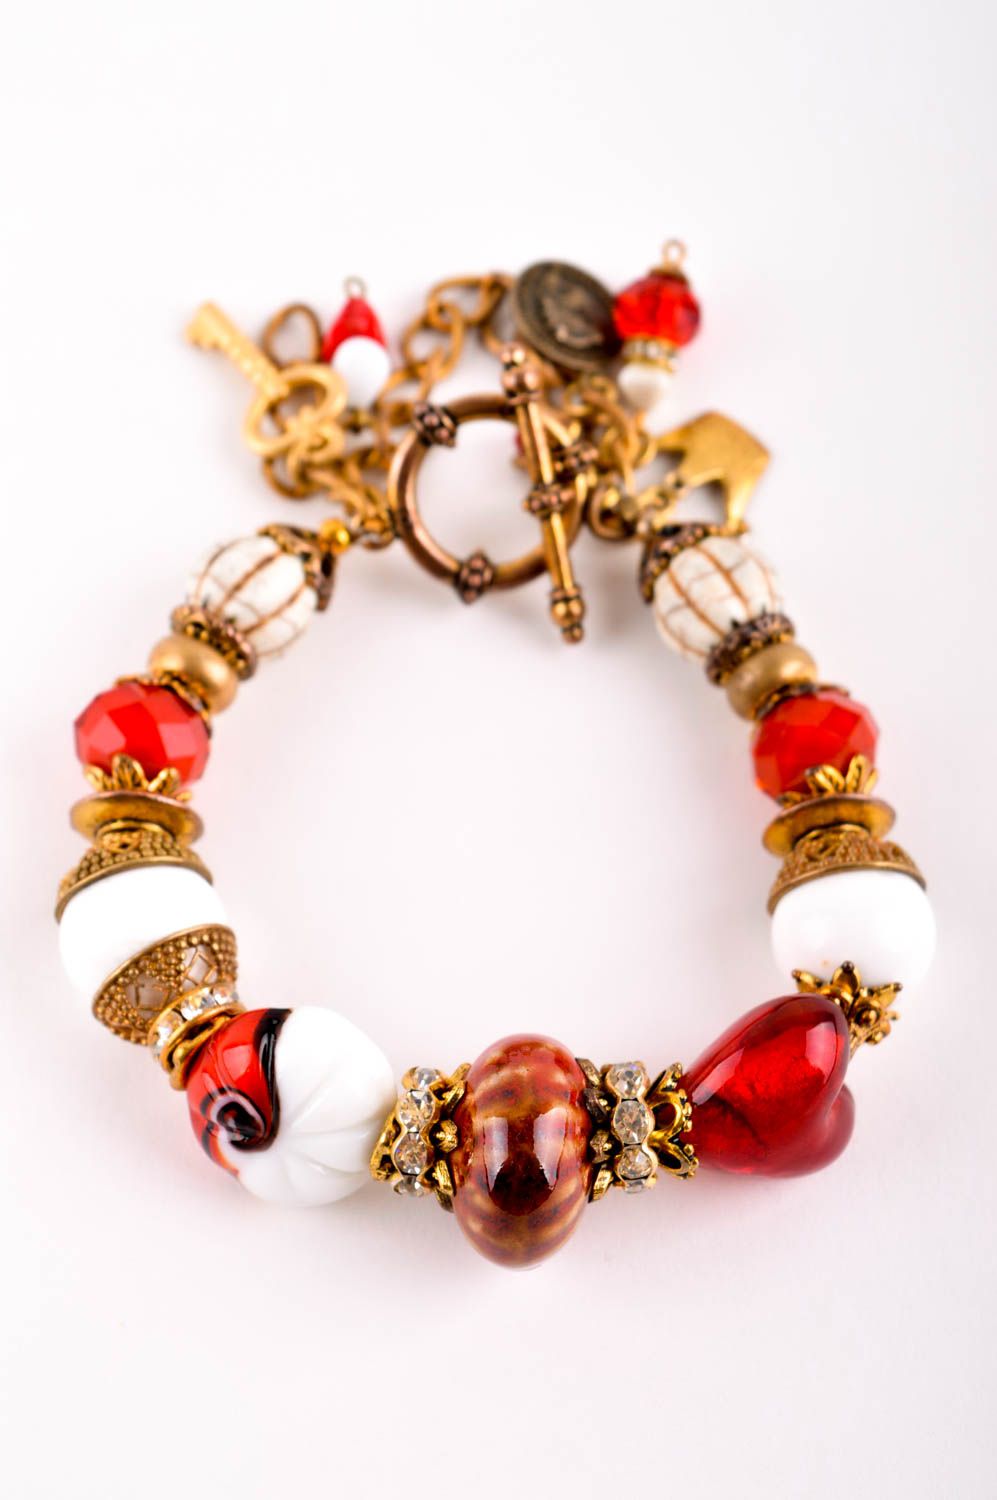 Handmade bracelet with natural stones jewelry stones stylish fashion jewelry photo 2